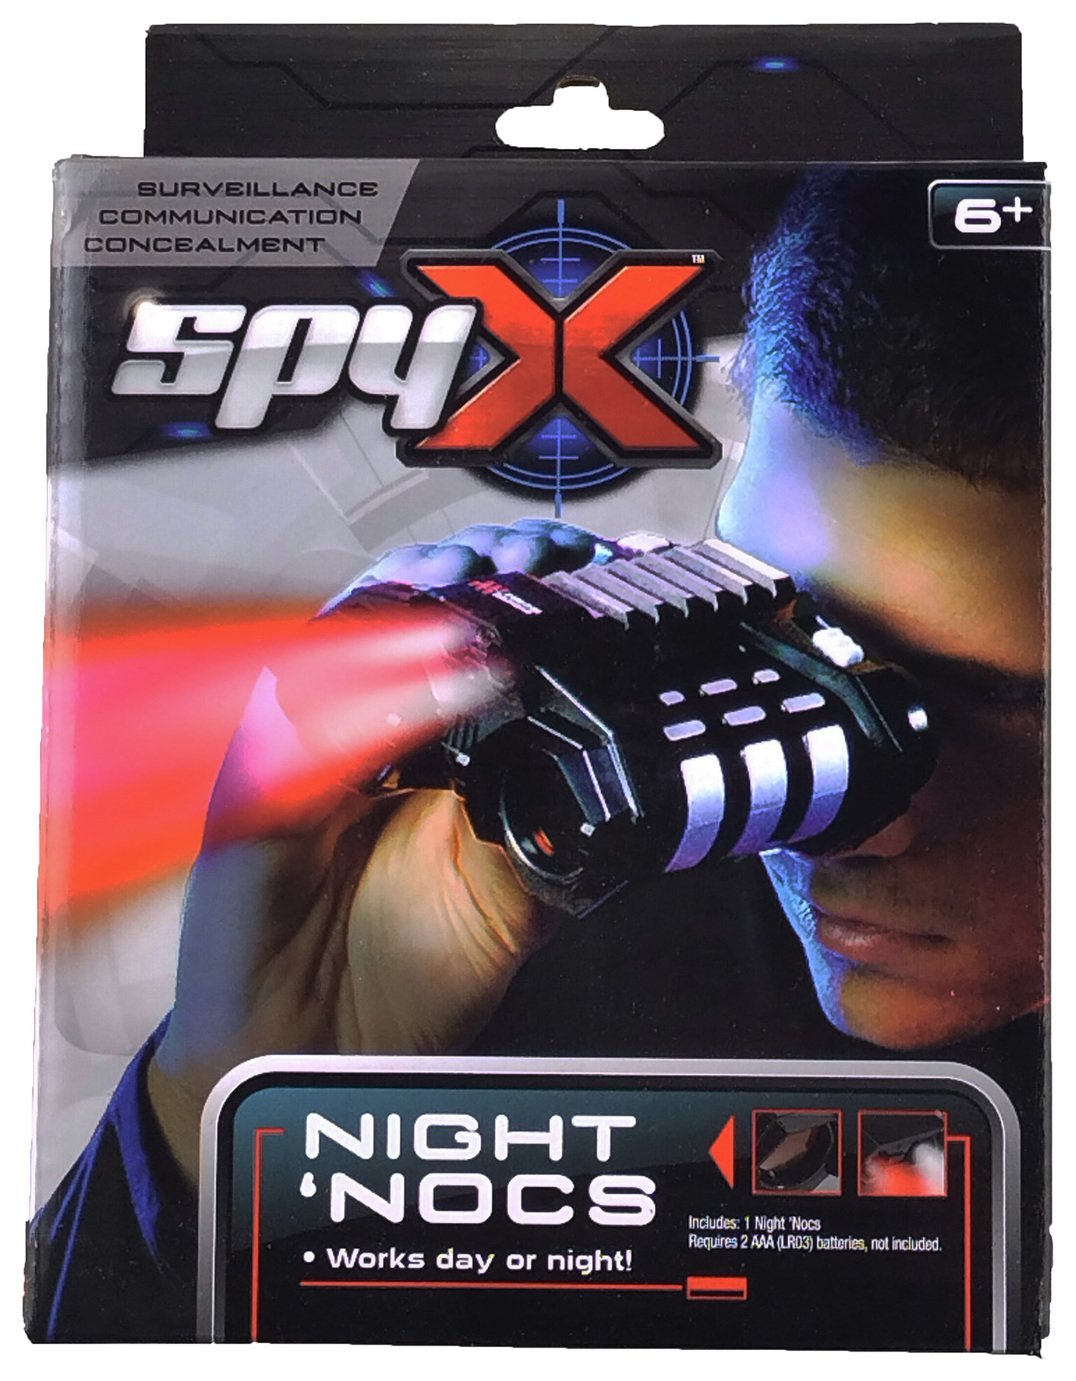 Spy X Night Nocs Binoculars